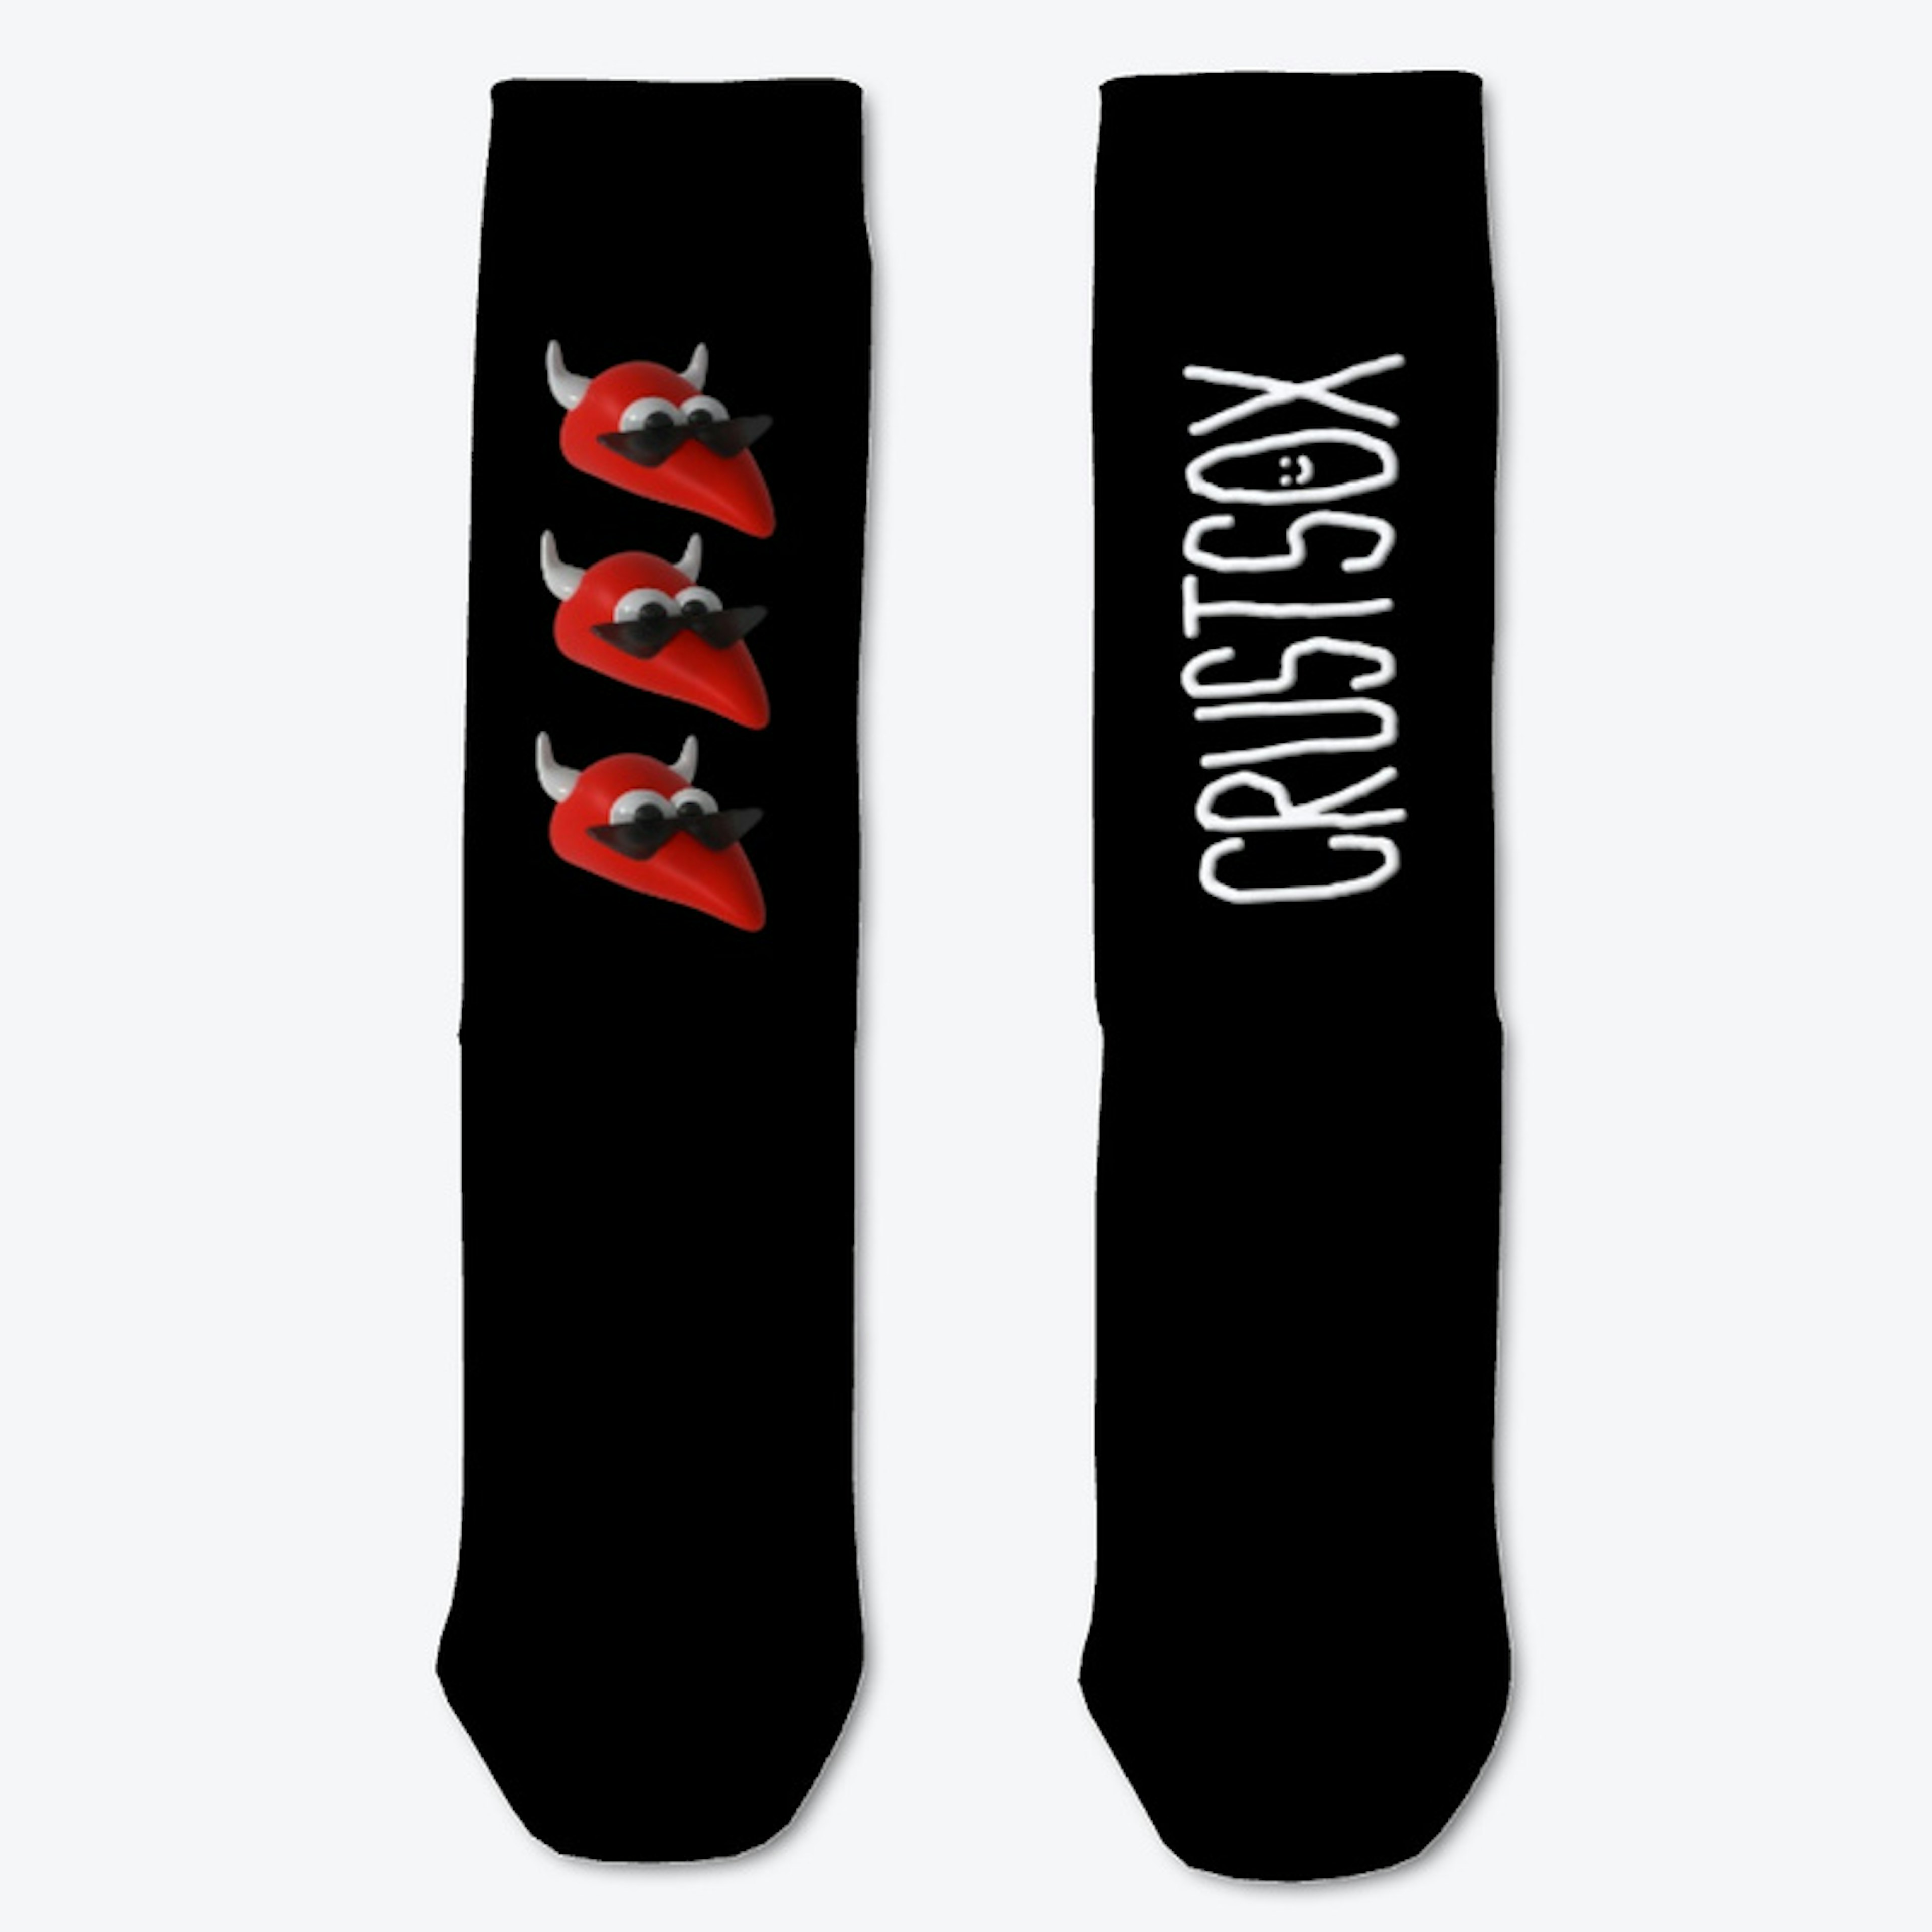 Crustsox Crust Socks